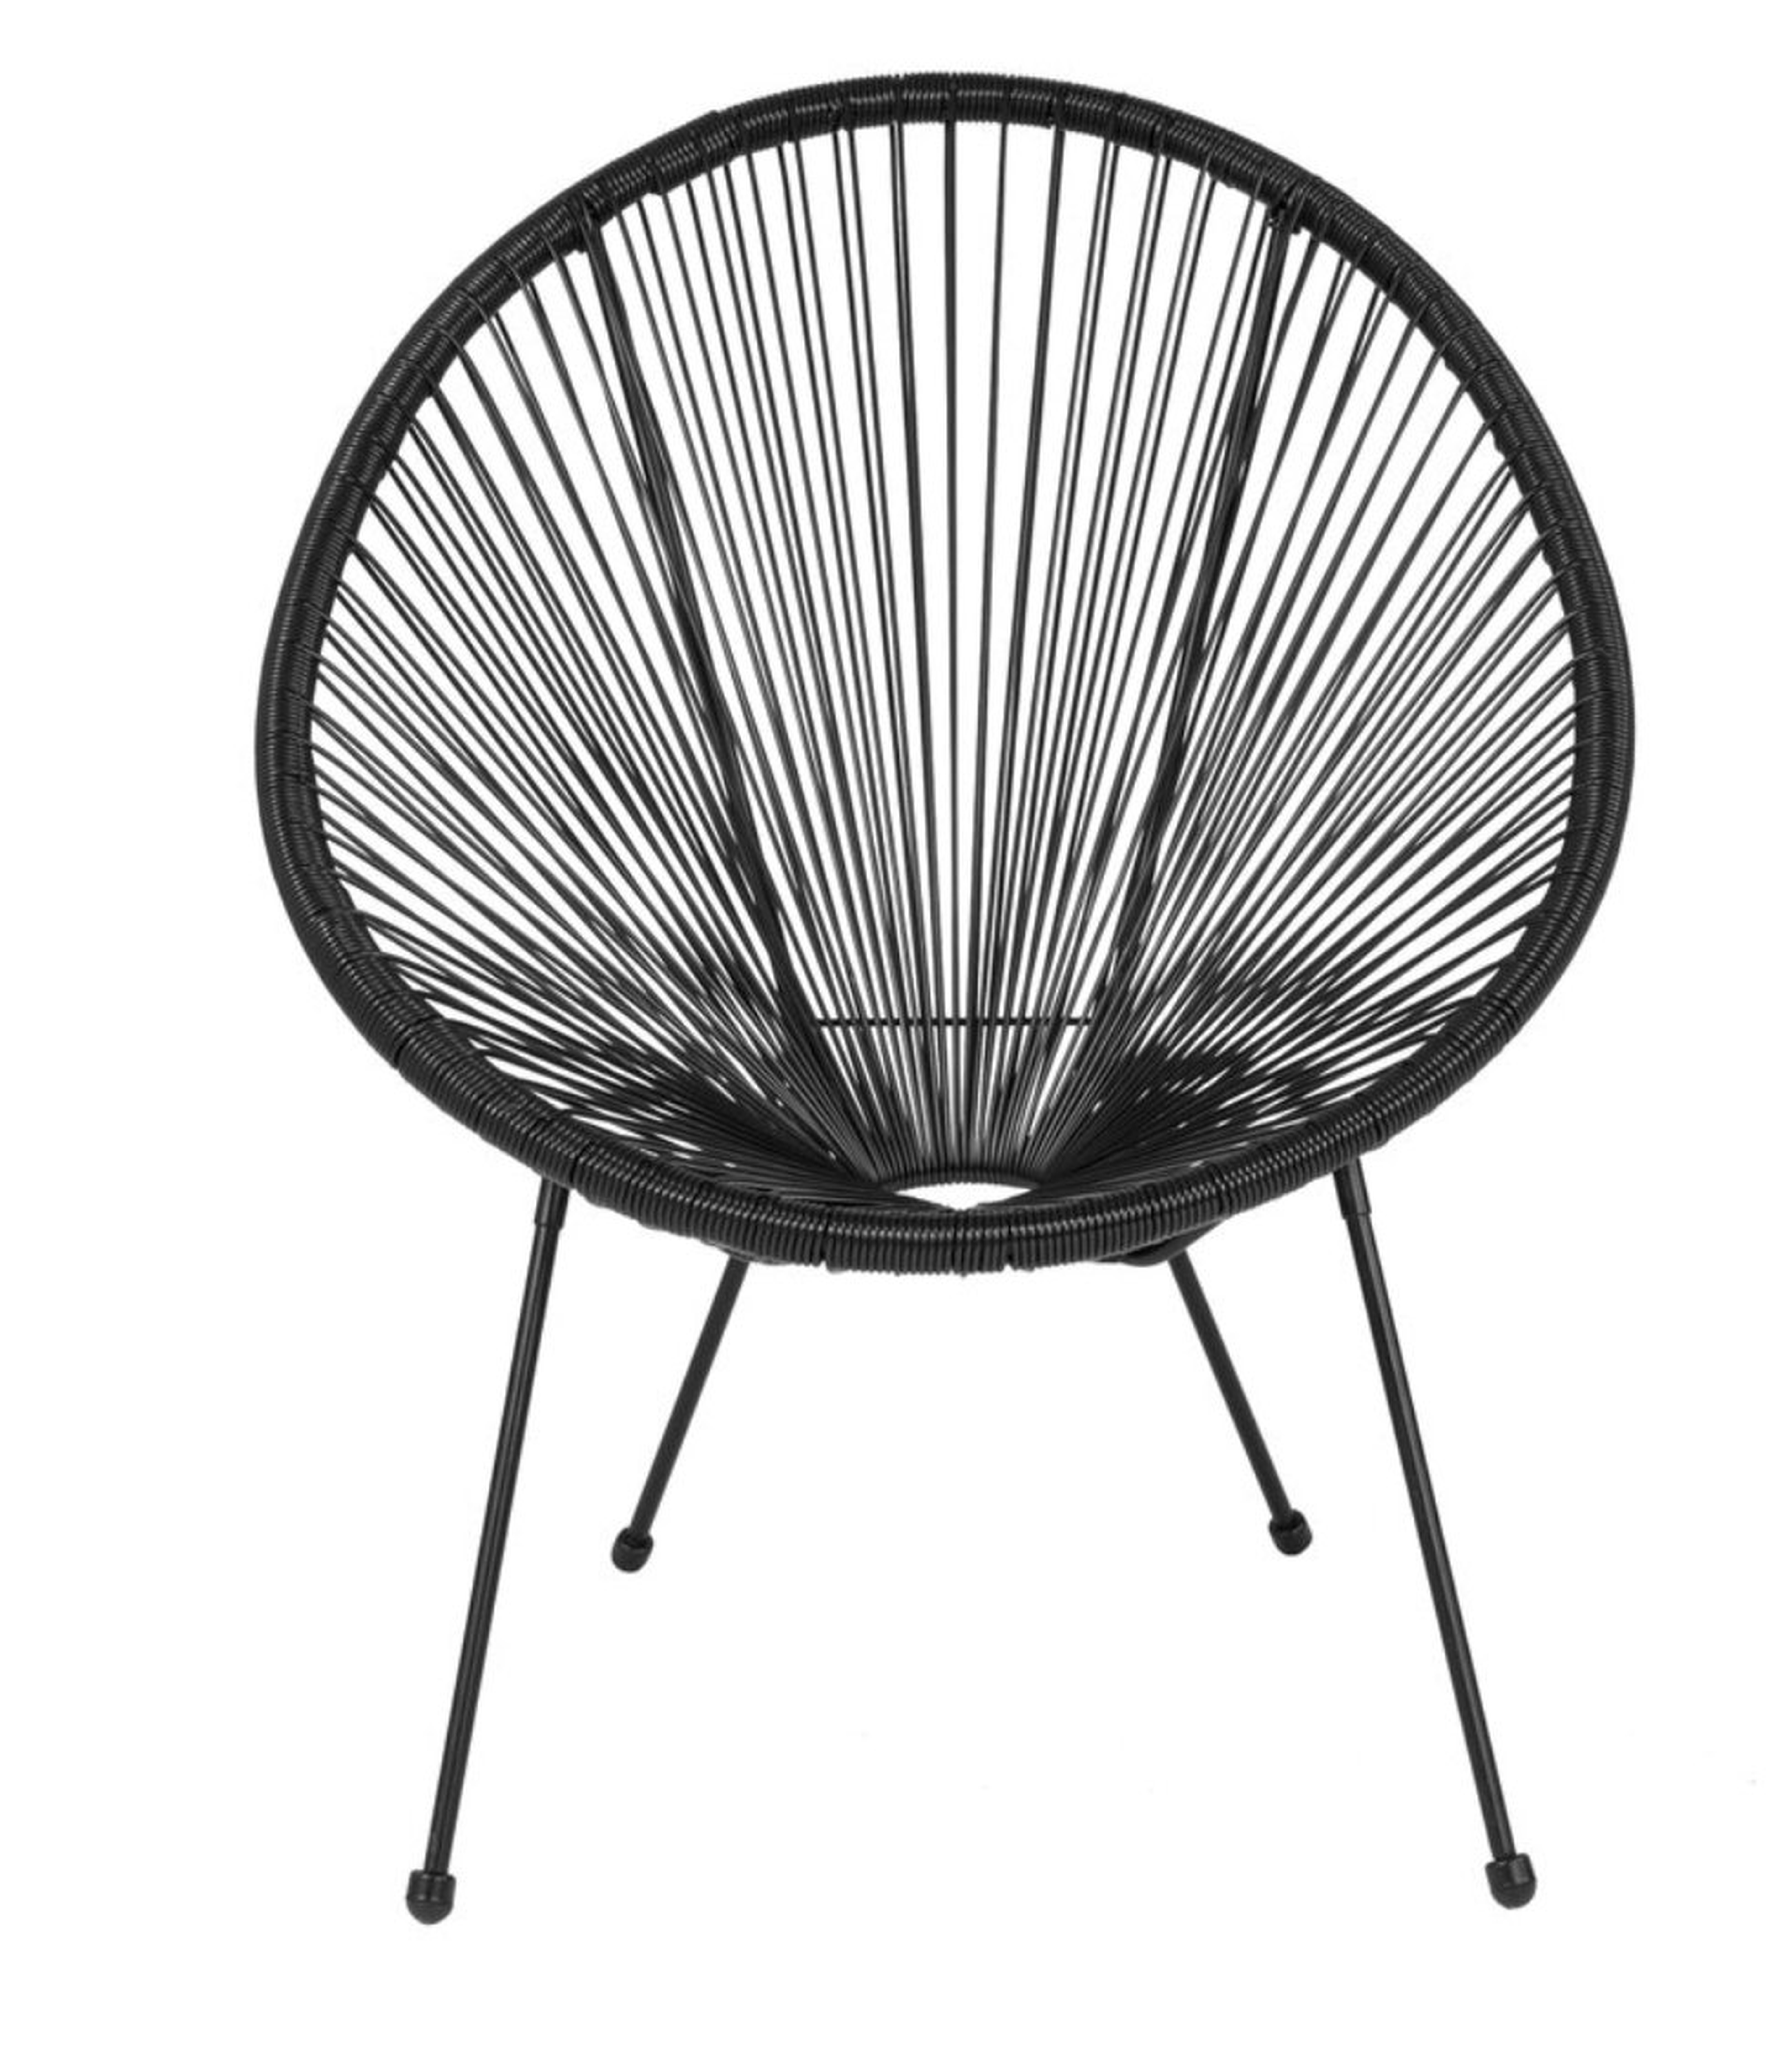 Kelleia Patio Chair - Wayfair